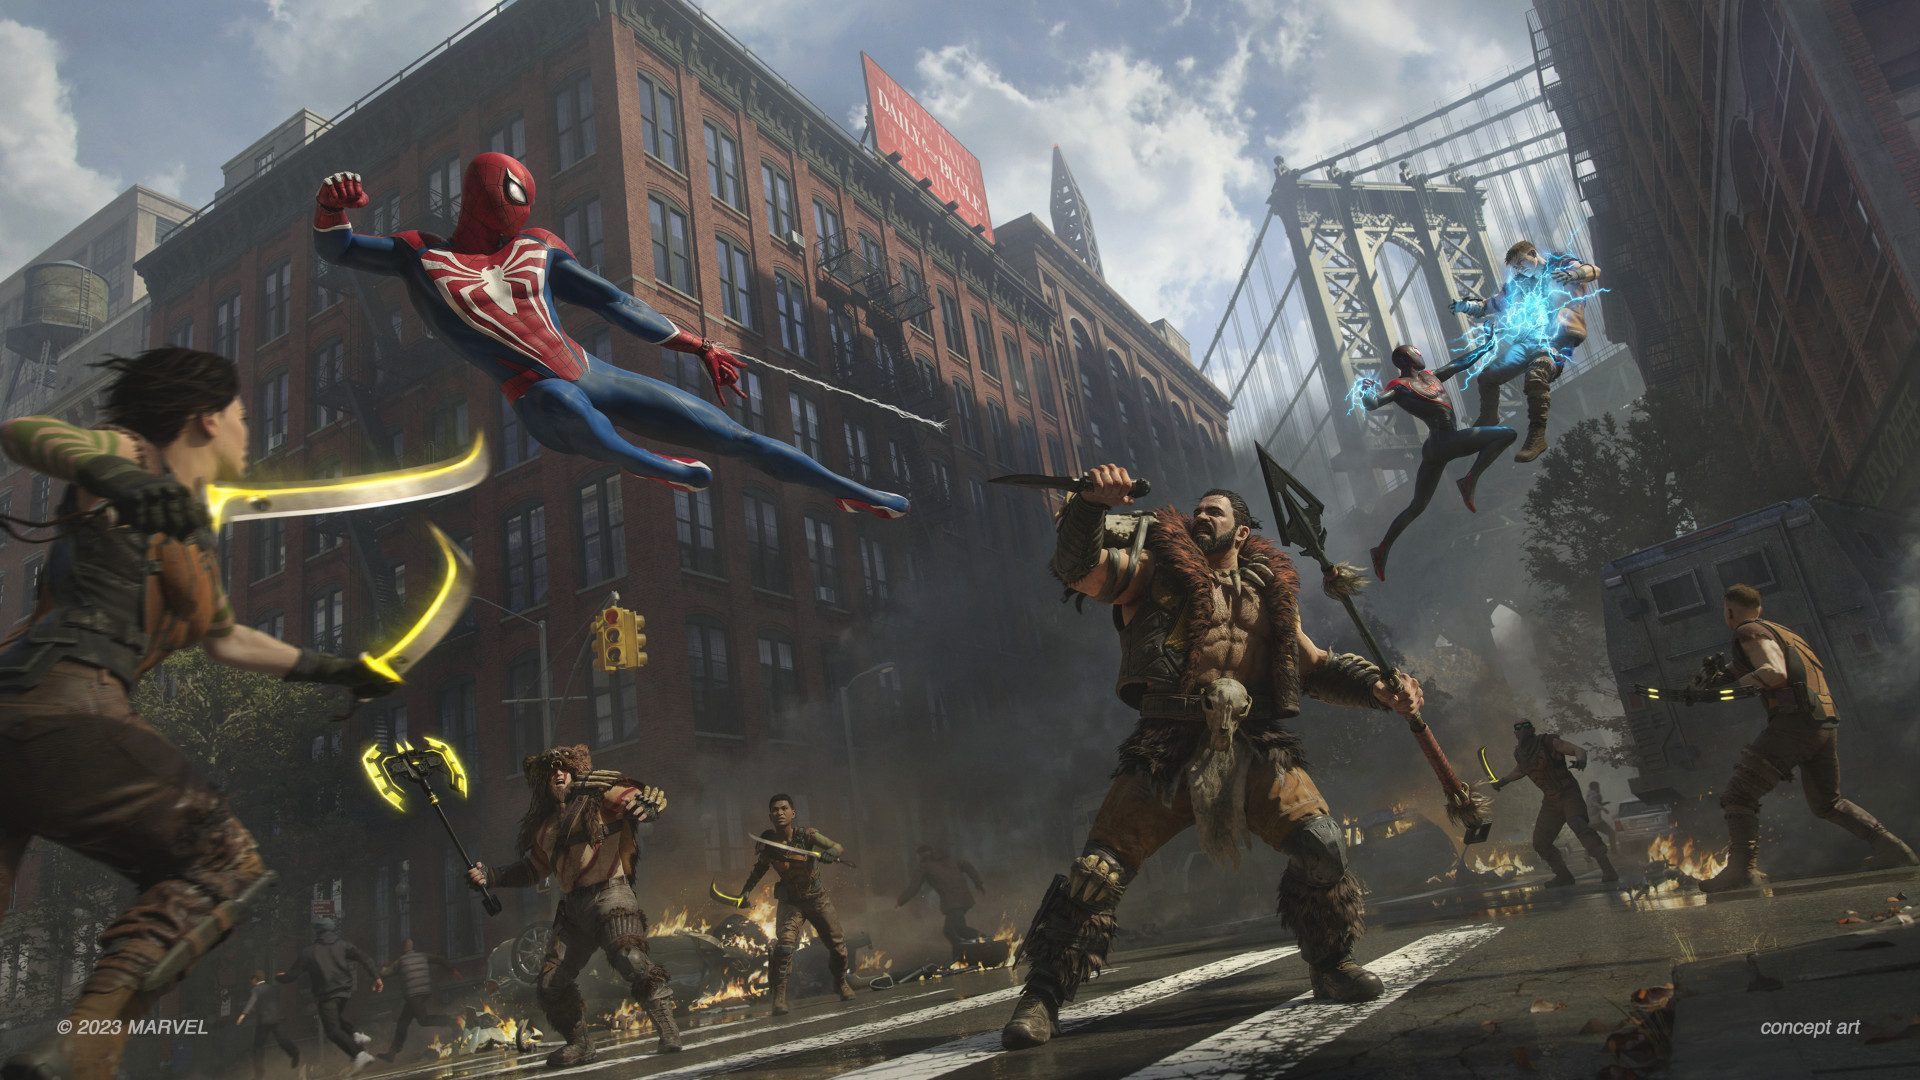 Novo bundle do PS5 com Marvel's Spider-Man 2 já está disponível no Brasil -  PSX Brasil